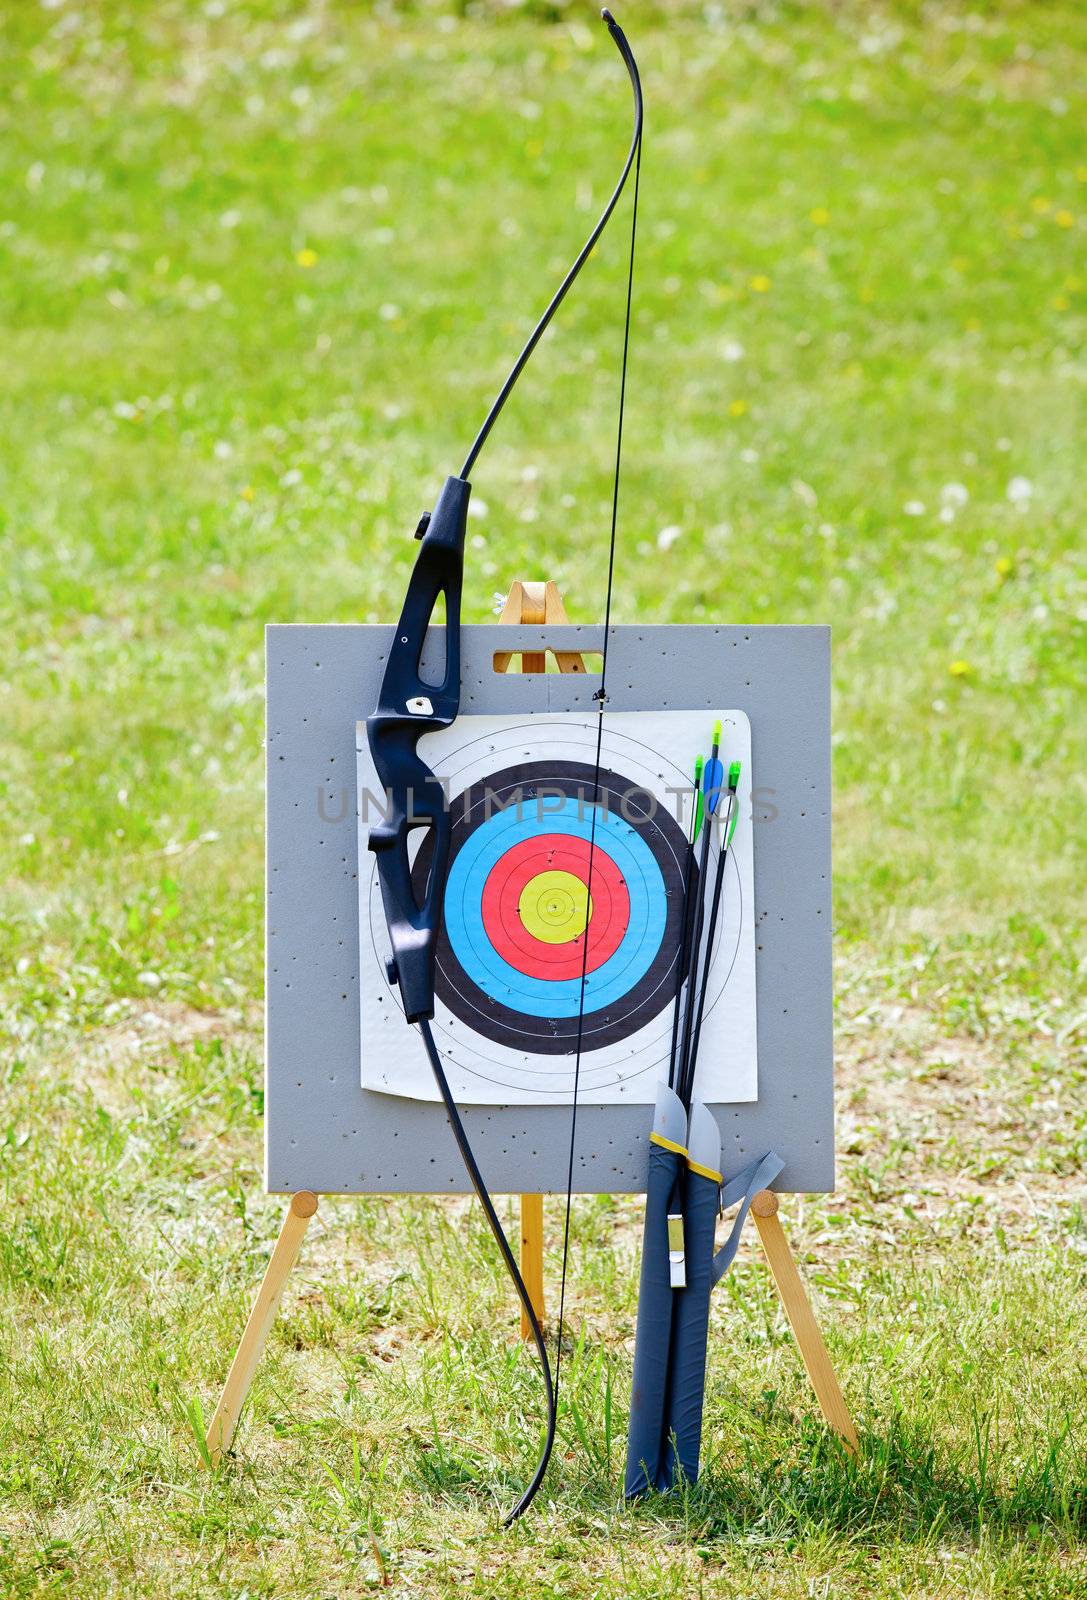 Target archery equipment by naumoid